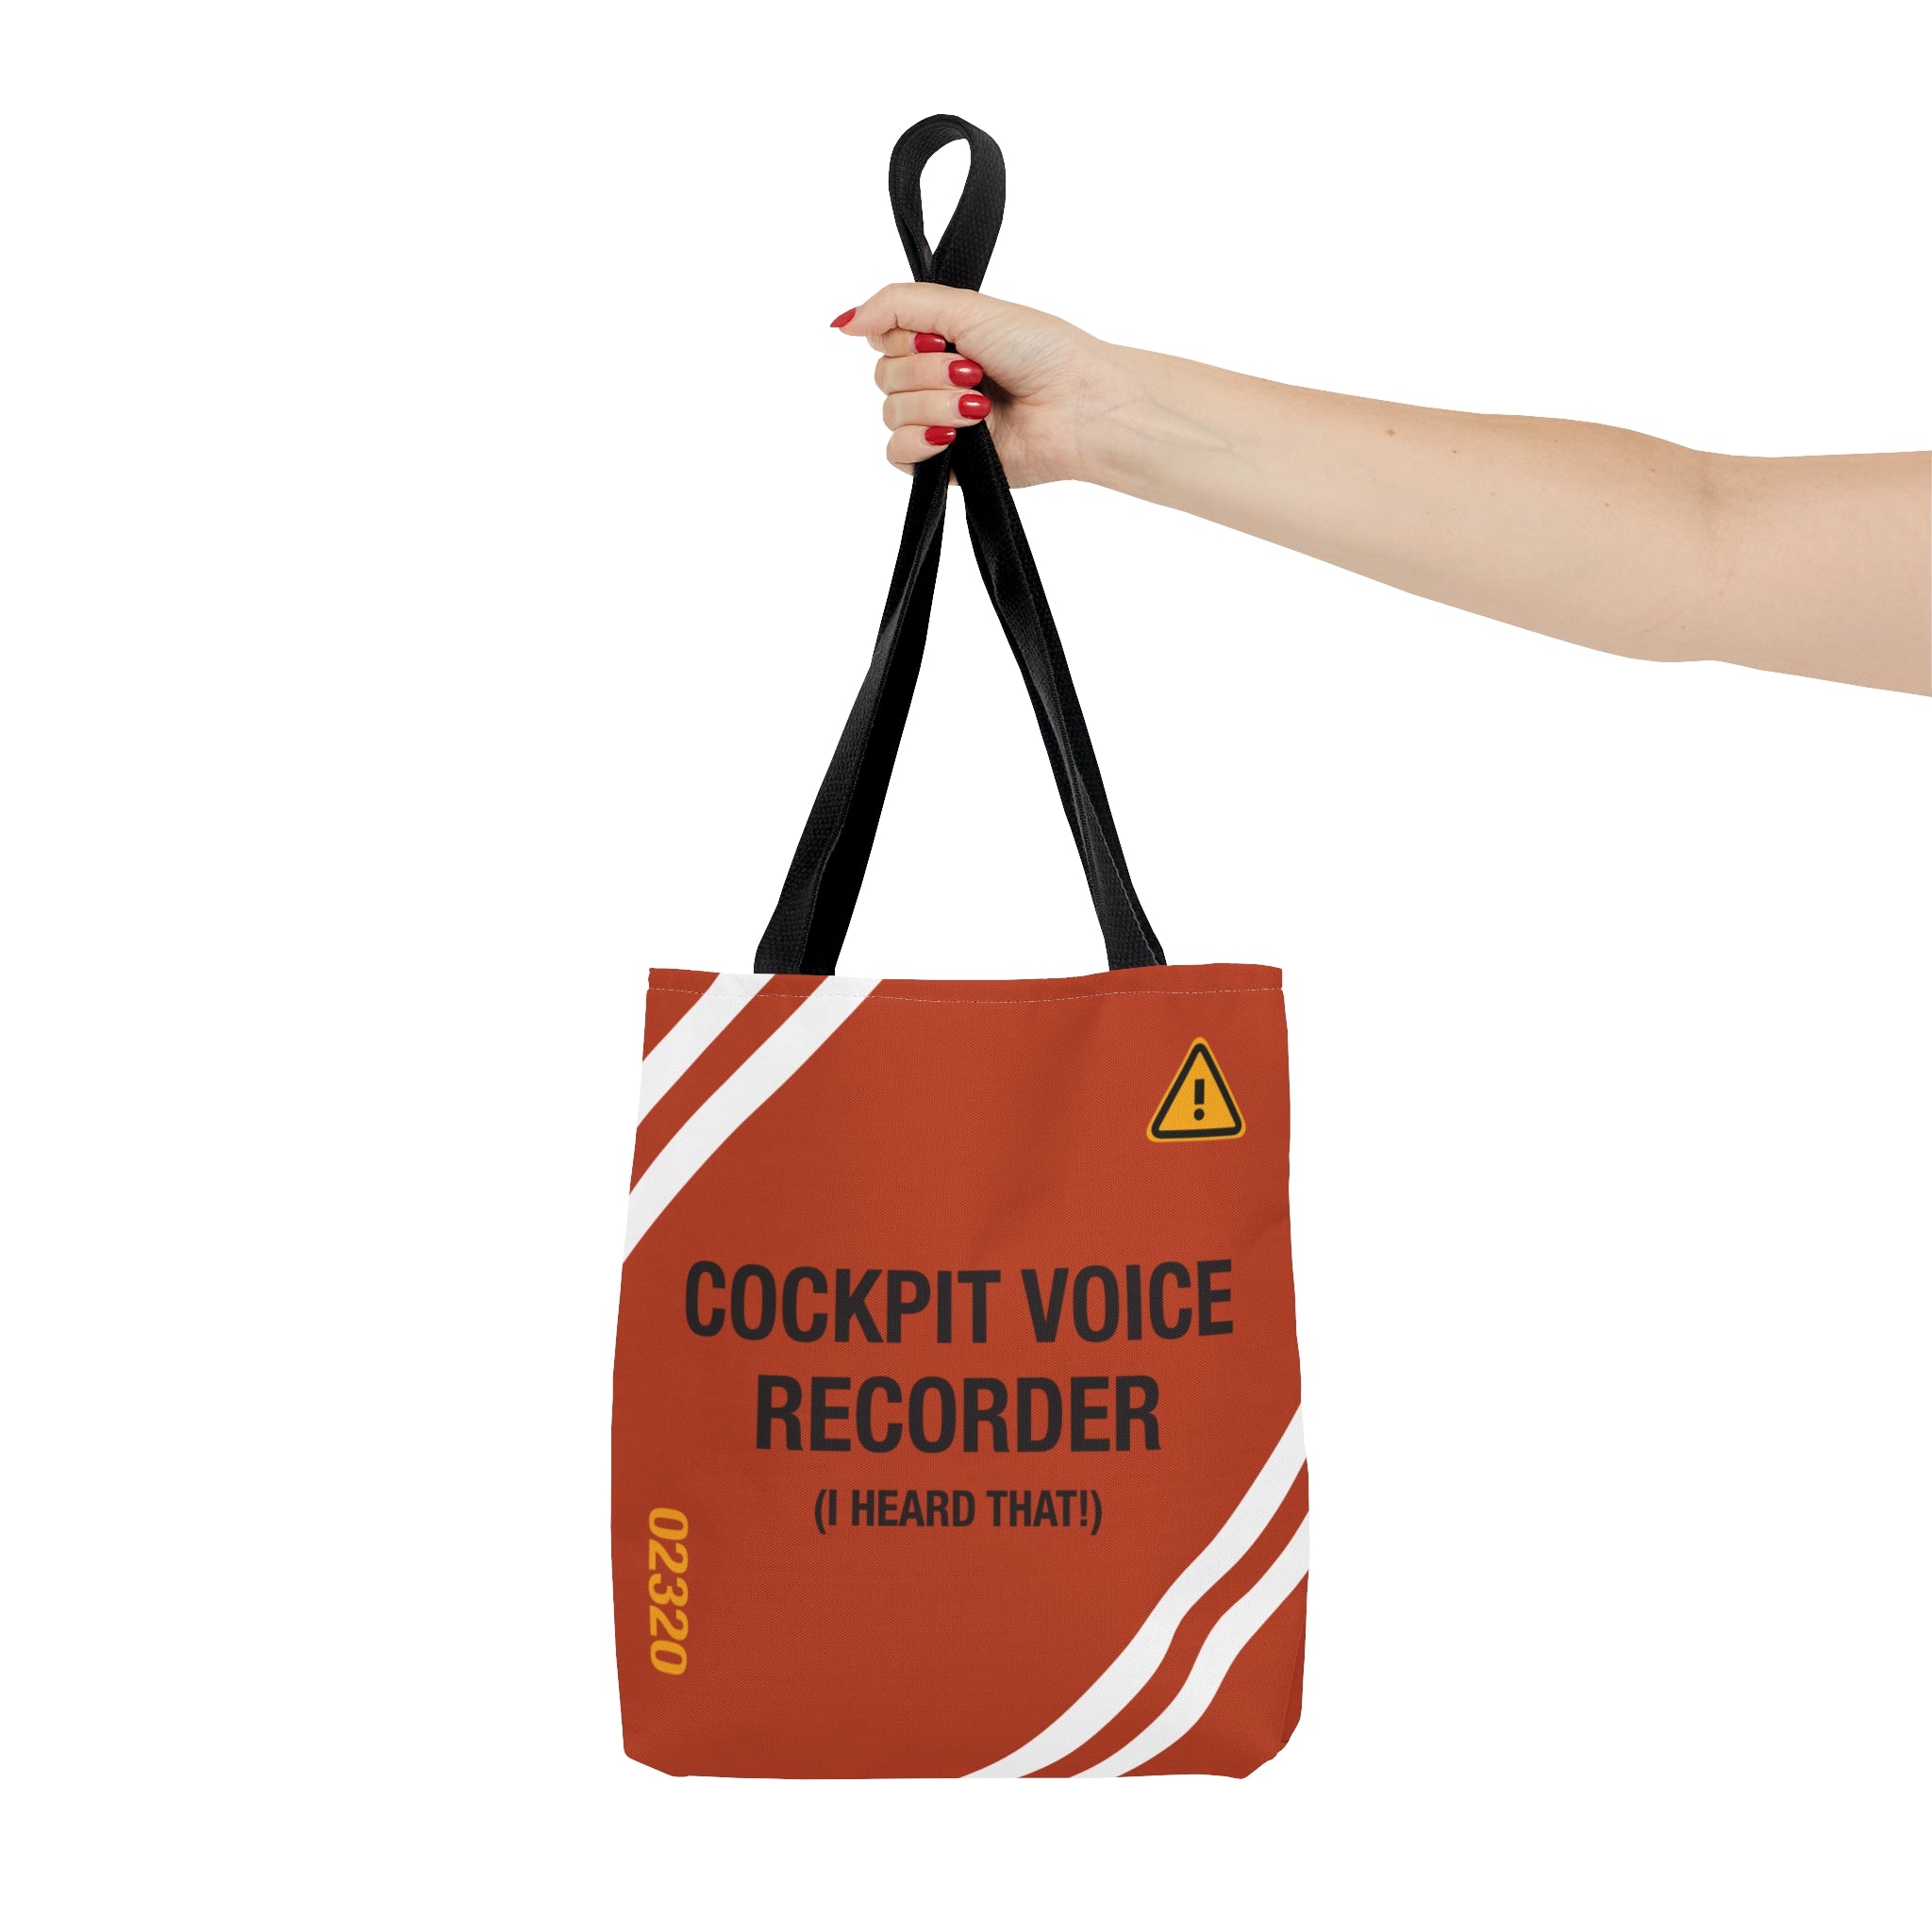 Cockpit Voice Recorder Tote Bag